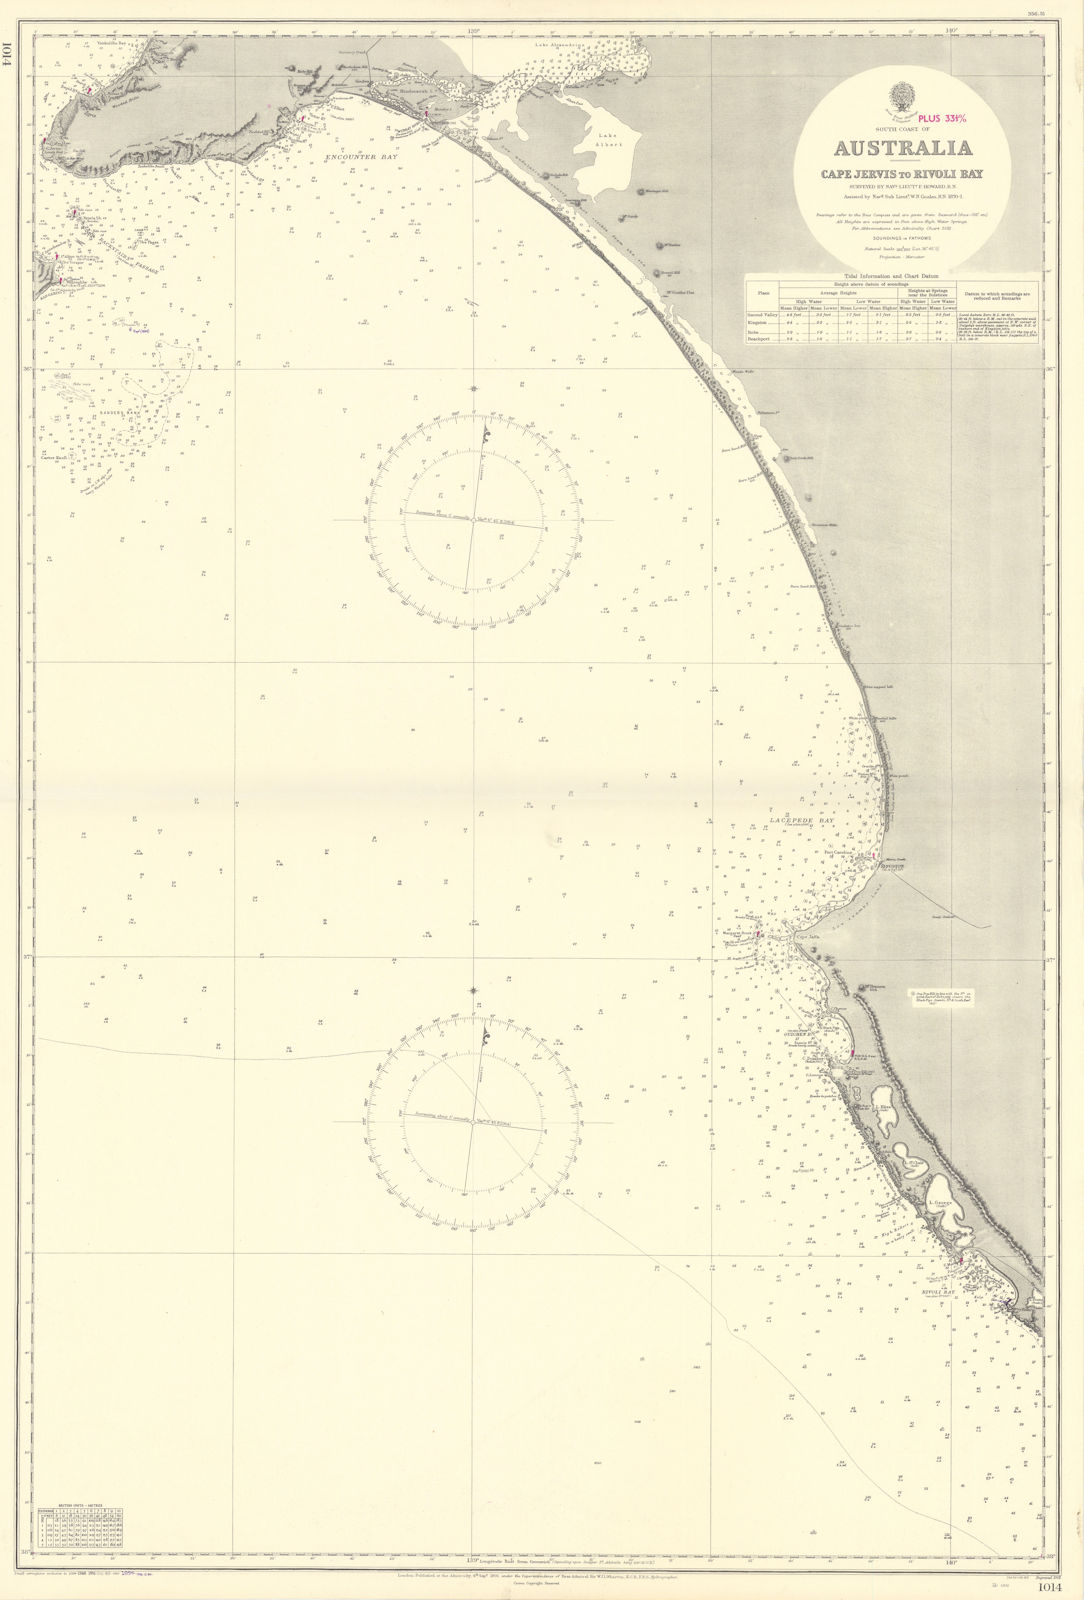 South Australia coast. Long Bay Cape Jervis. ADMIRALTY sea chart 1901 (1954) map